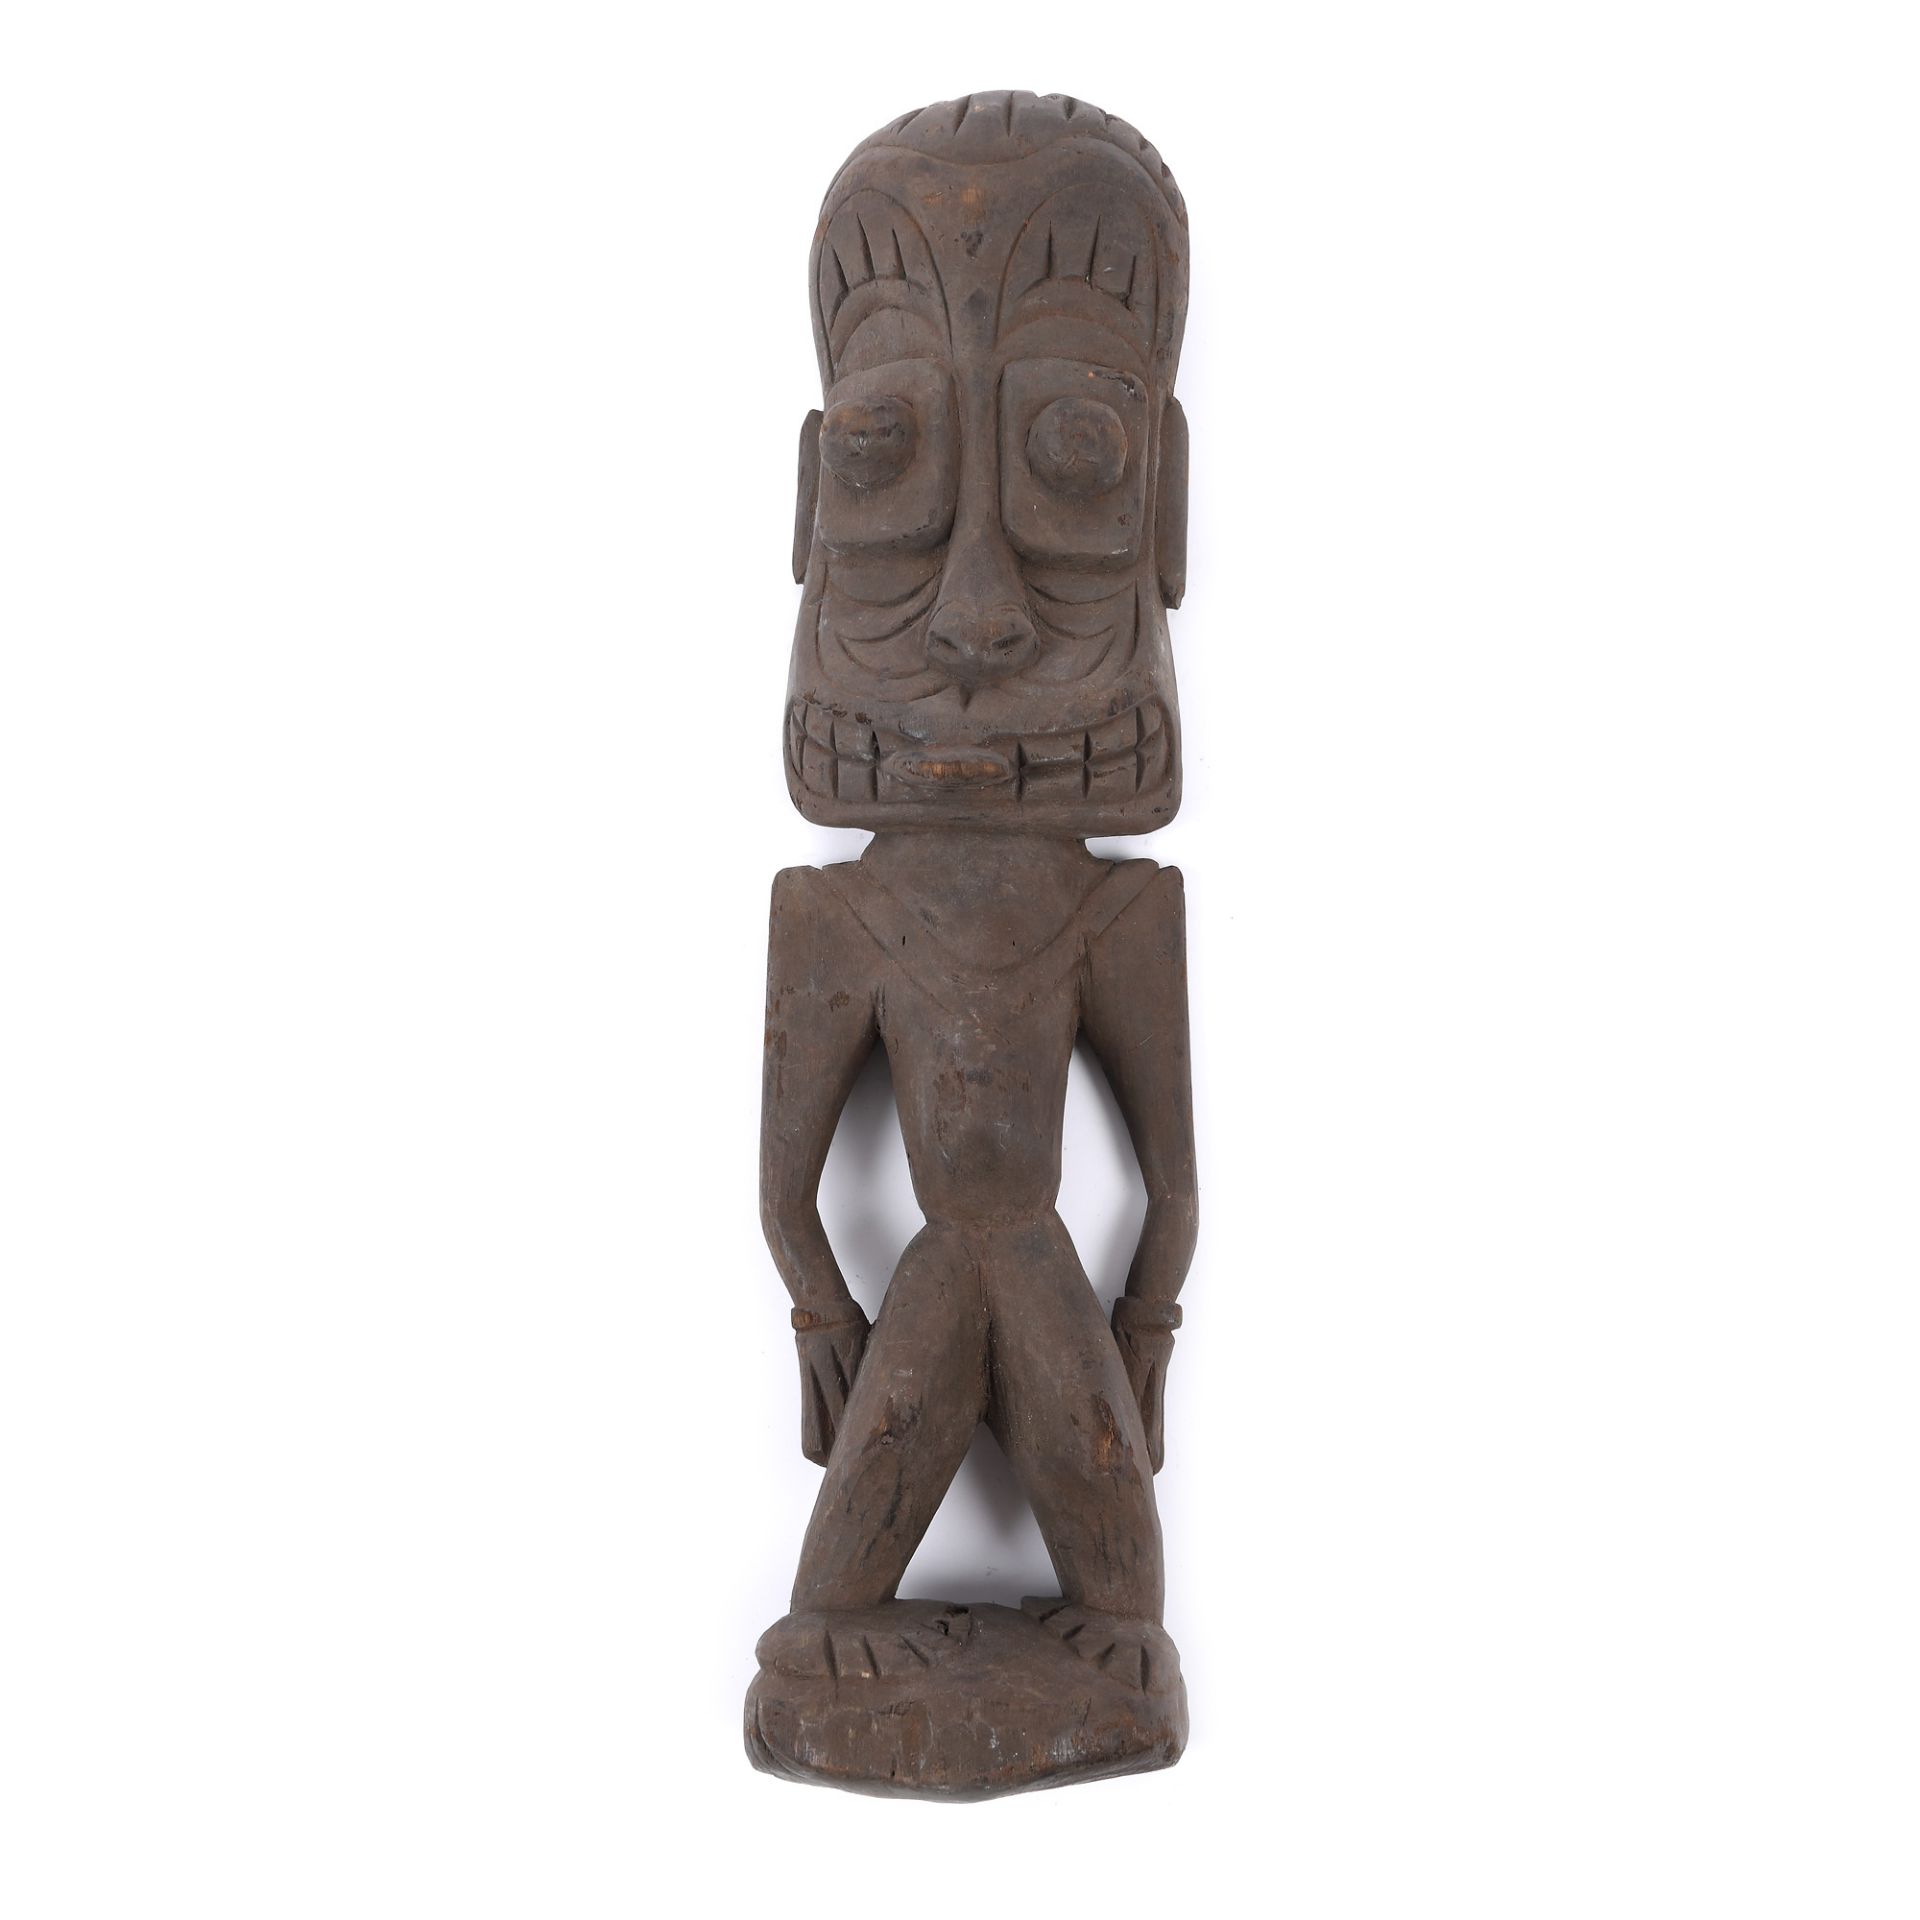 Sculpture illustrating a demon from Tambanum, Papua New Guinea